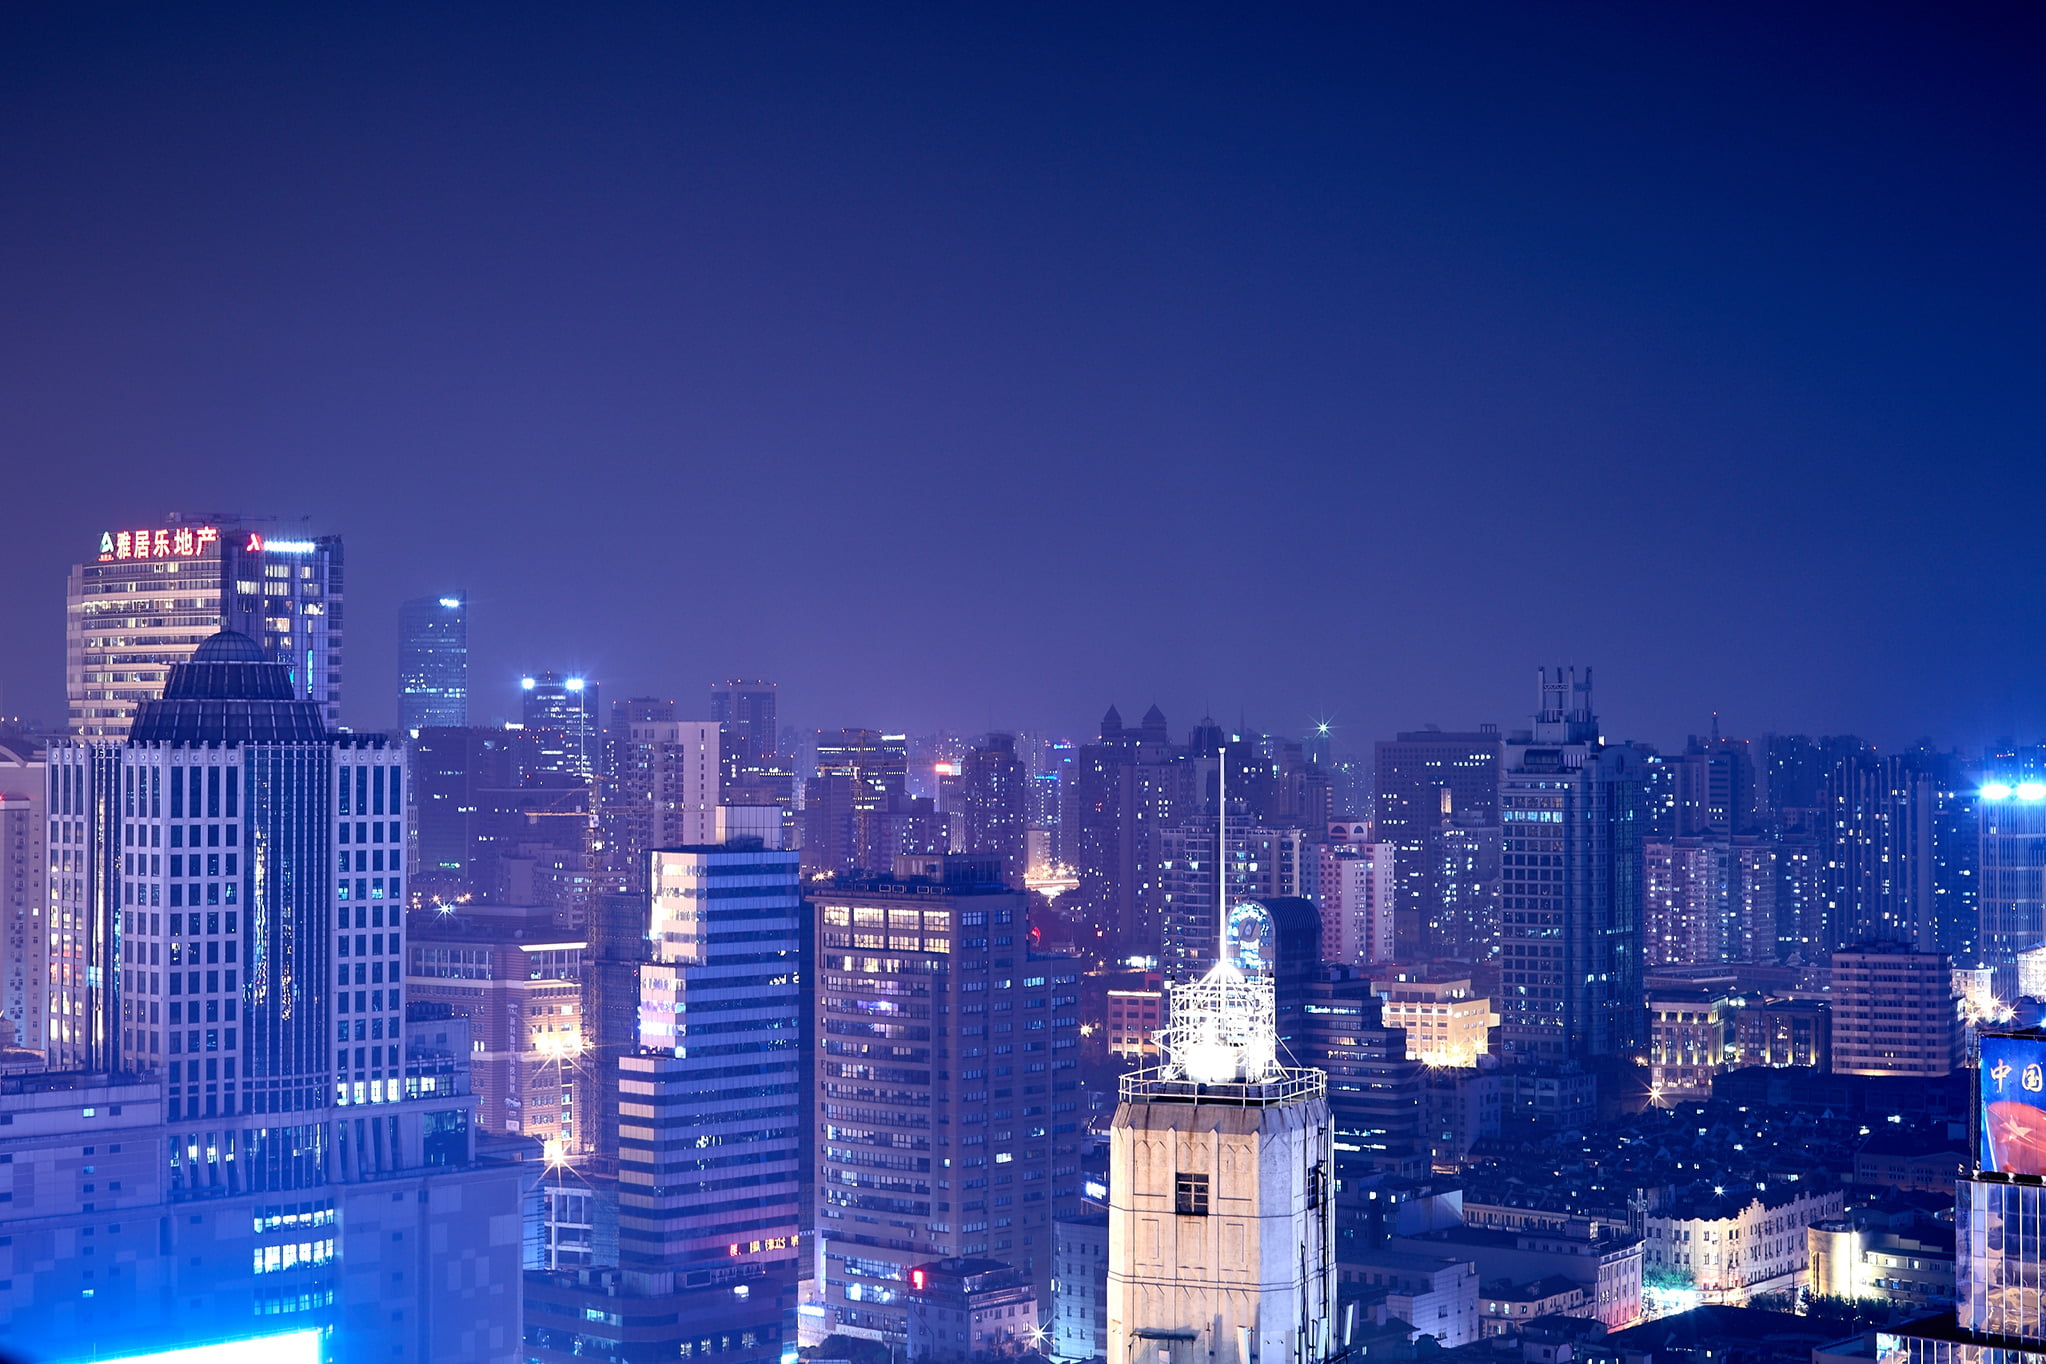 A stunning cityscape image of Shanghai, China at night